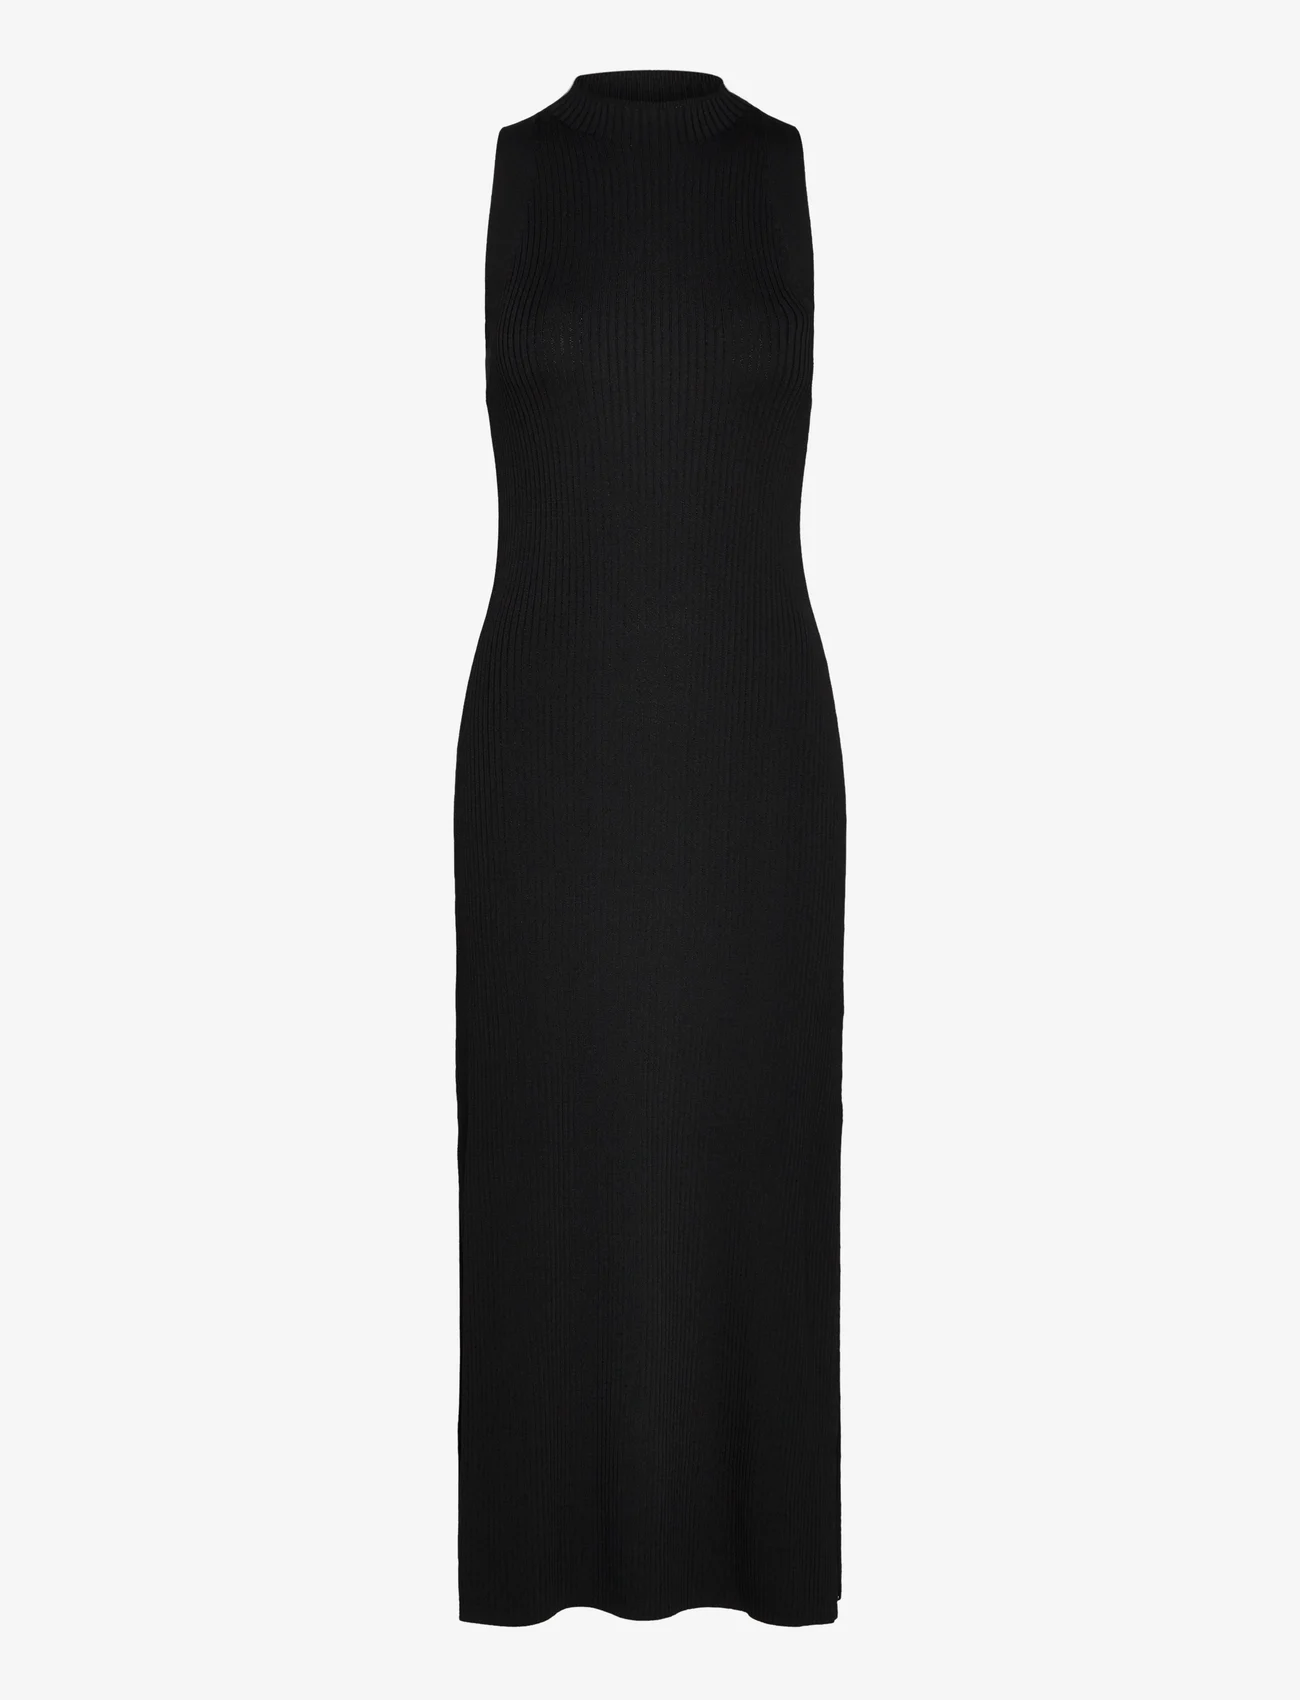 IVY OAK - Knitted Dress - t-shirtklänningar - black - 0